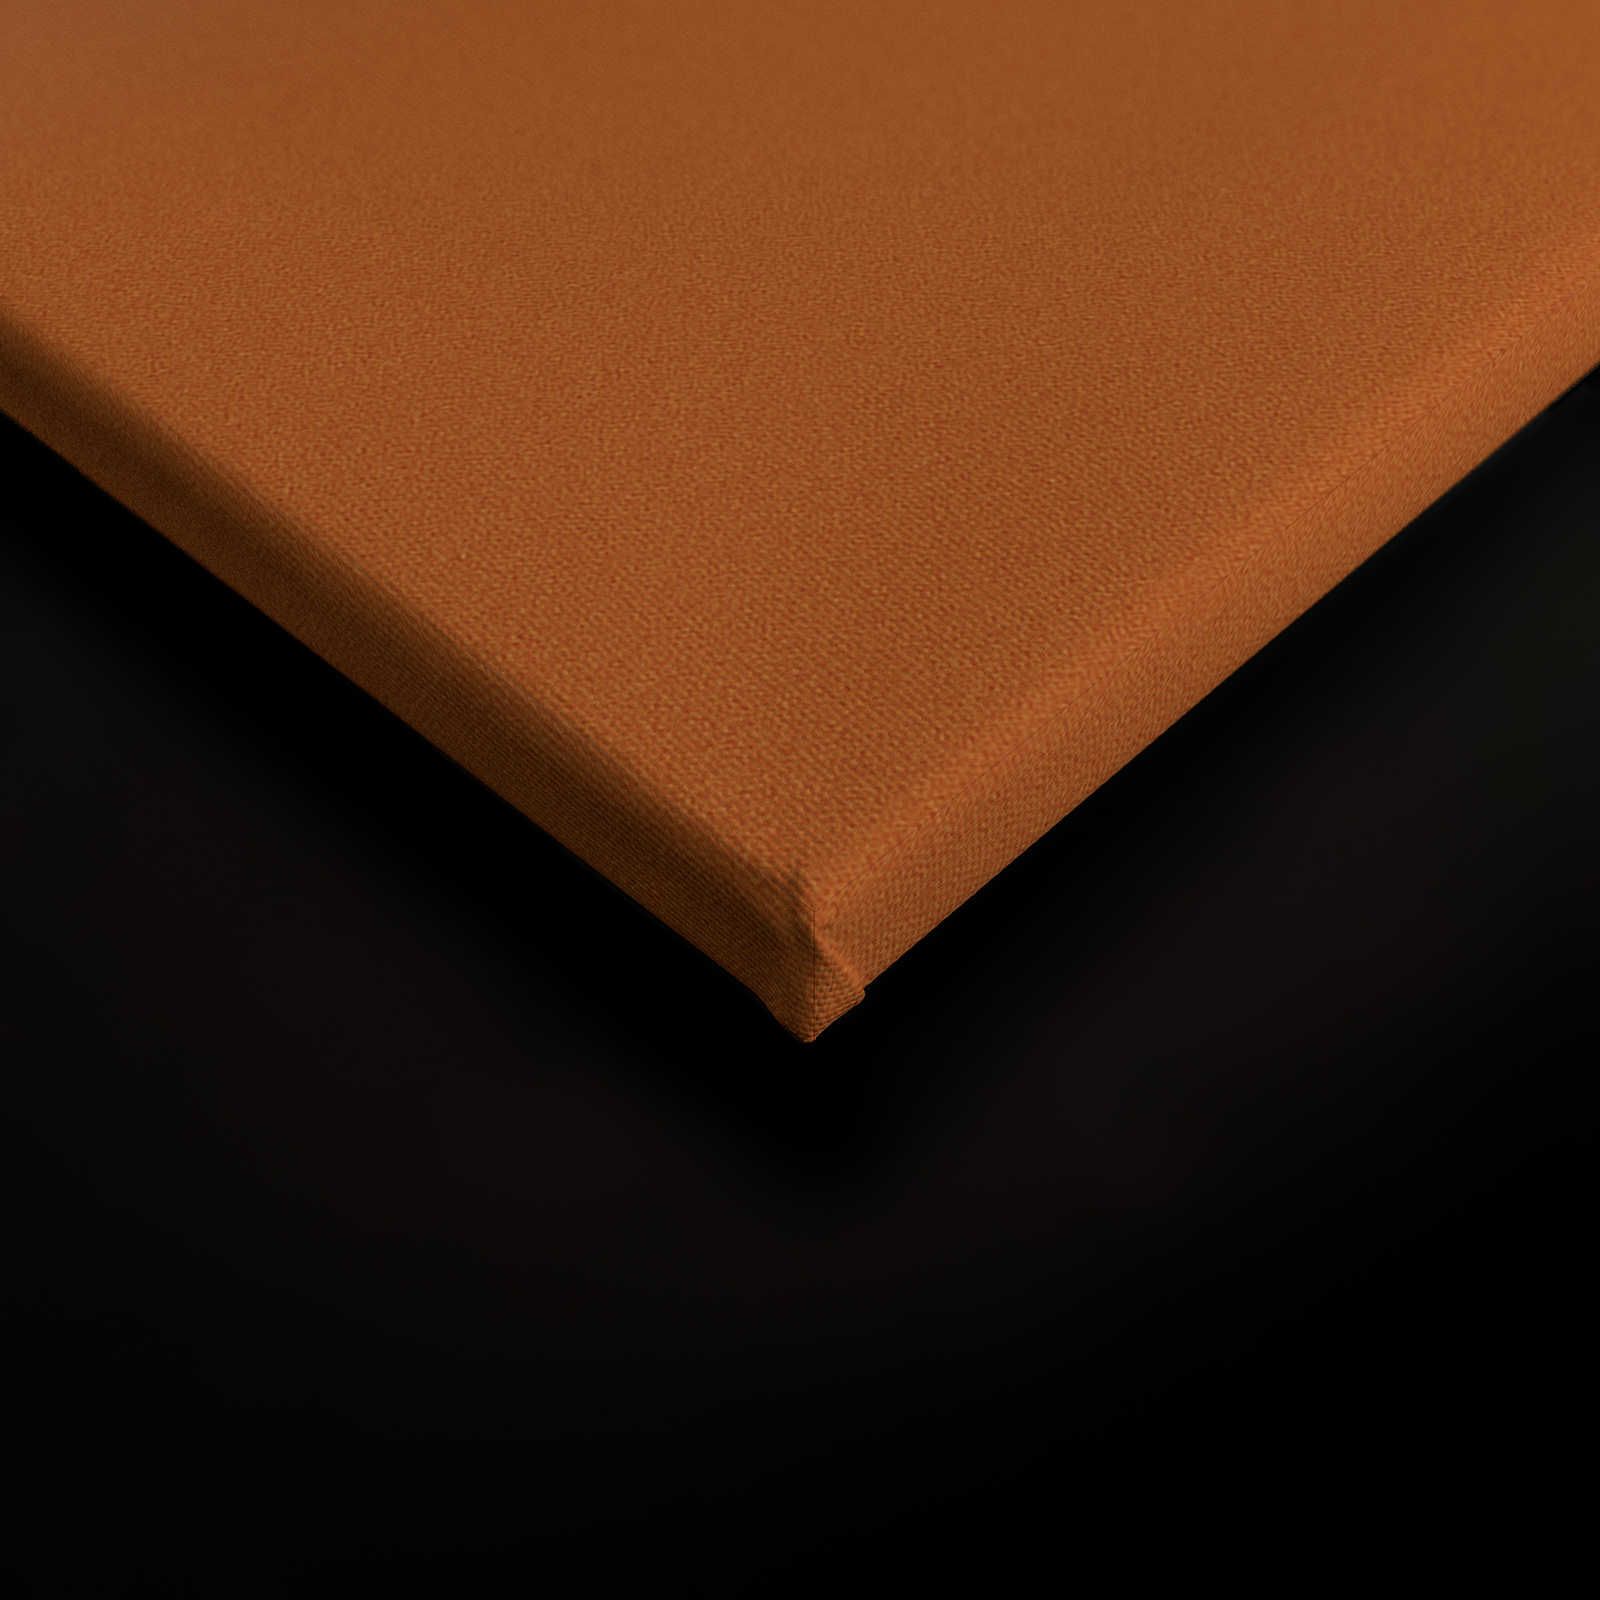             Colour Studio 4 - Ombre Leinwandbild Farbverlauf Rosa & Orange – 0,90 m x 0,60 m
        